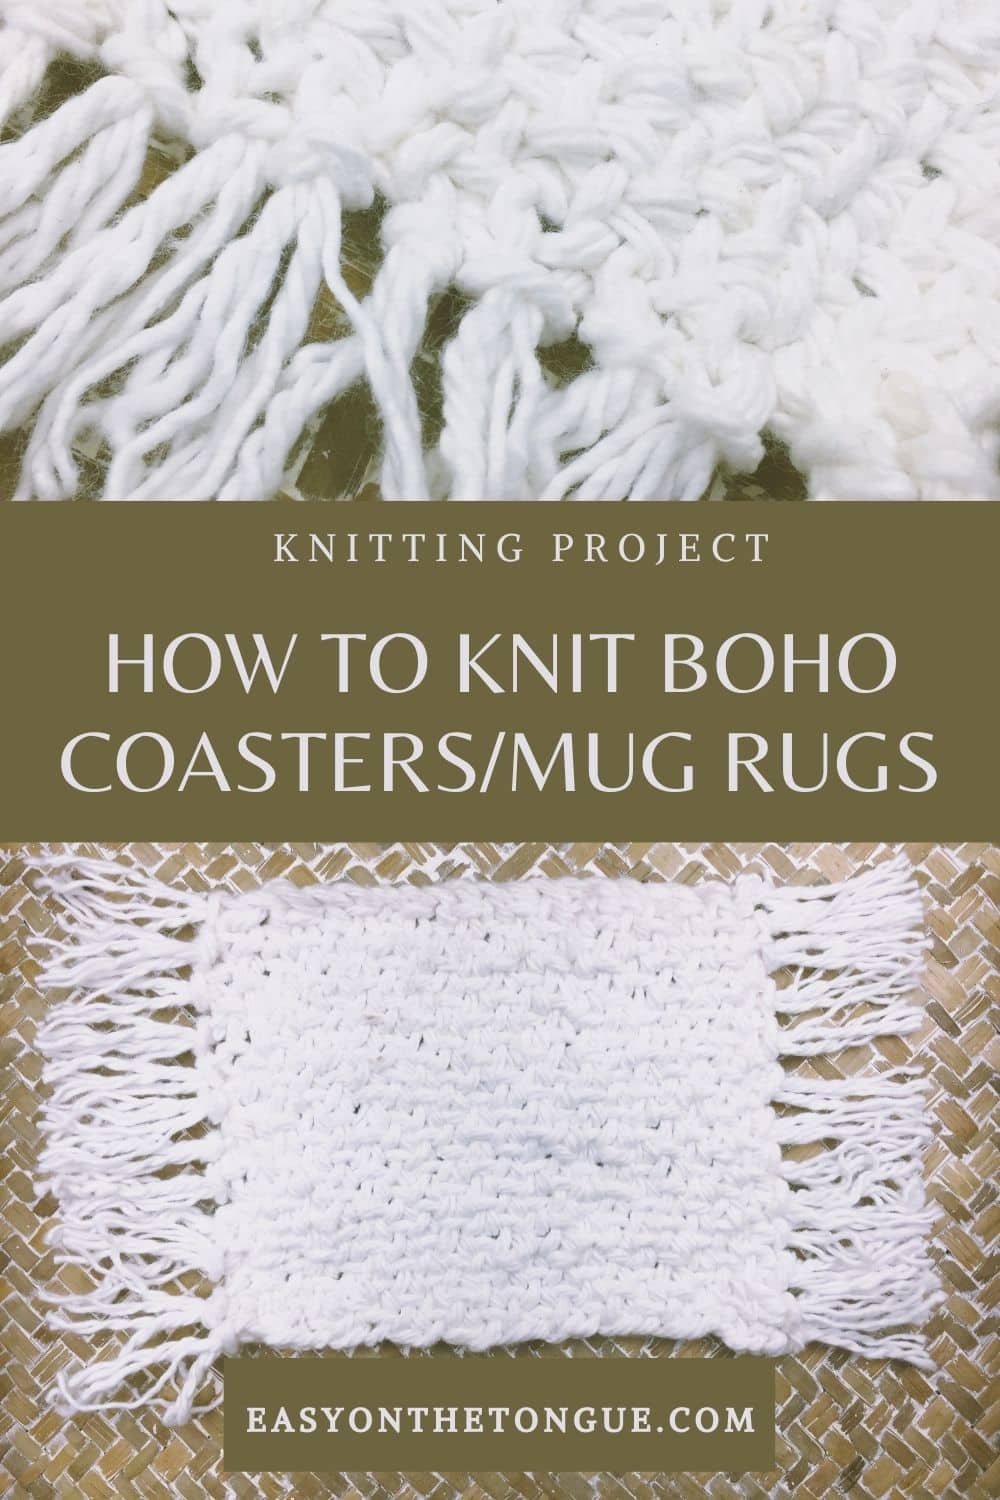 How to knit Boho coasters mug rugs Free pattern on easyonthetongue.com  How to Knit Boho Coasters Free Pattern